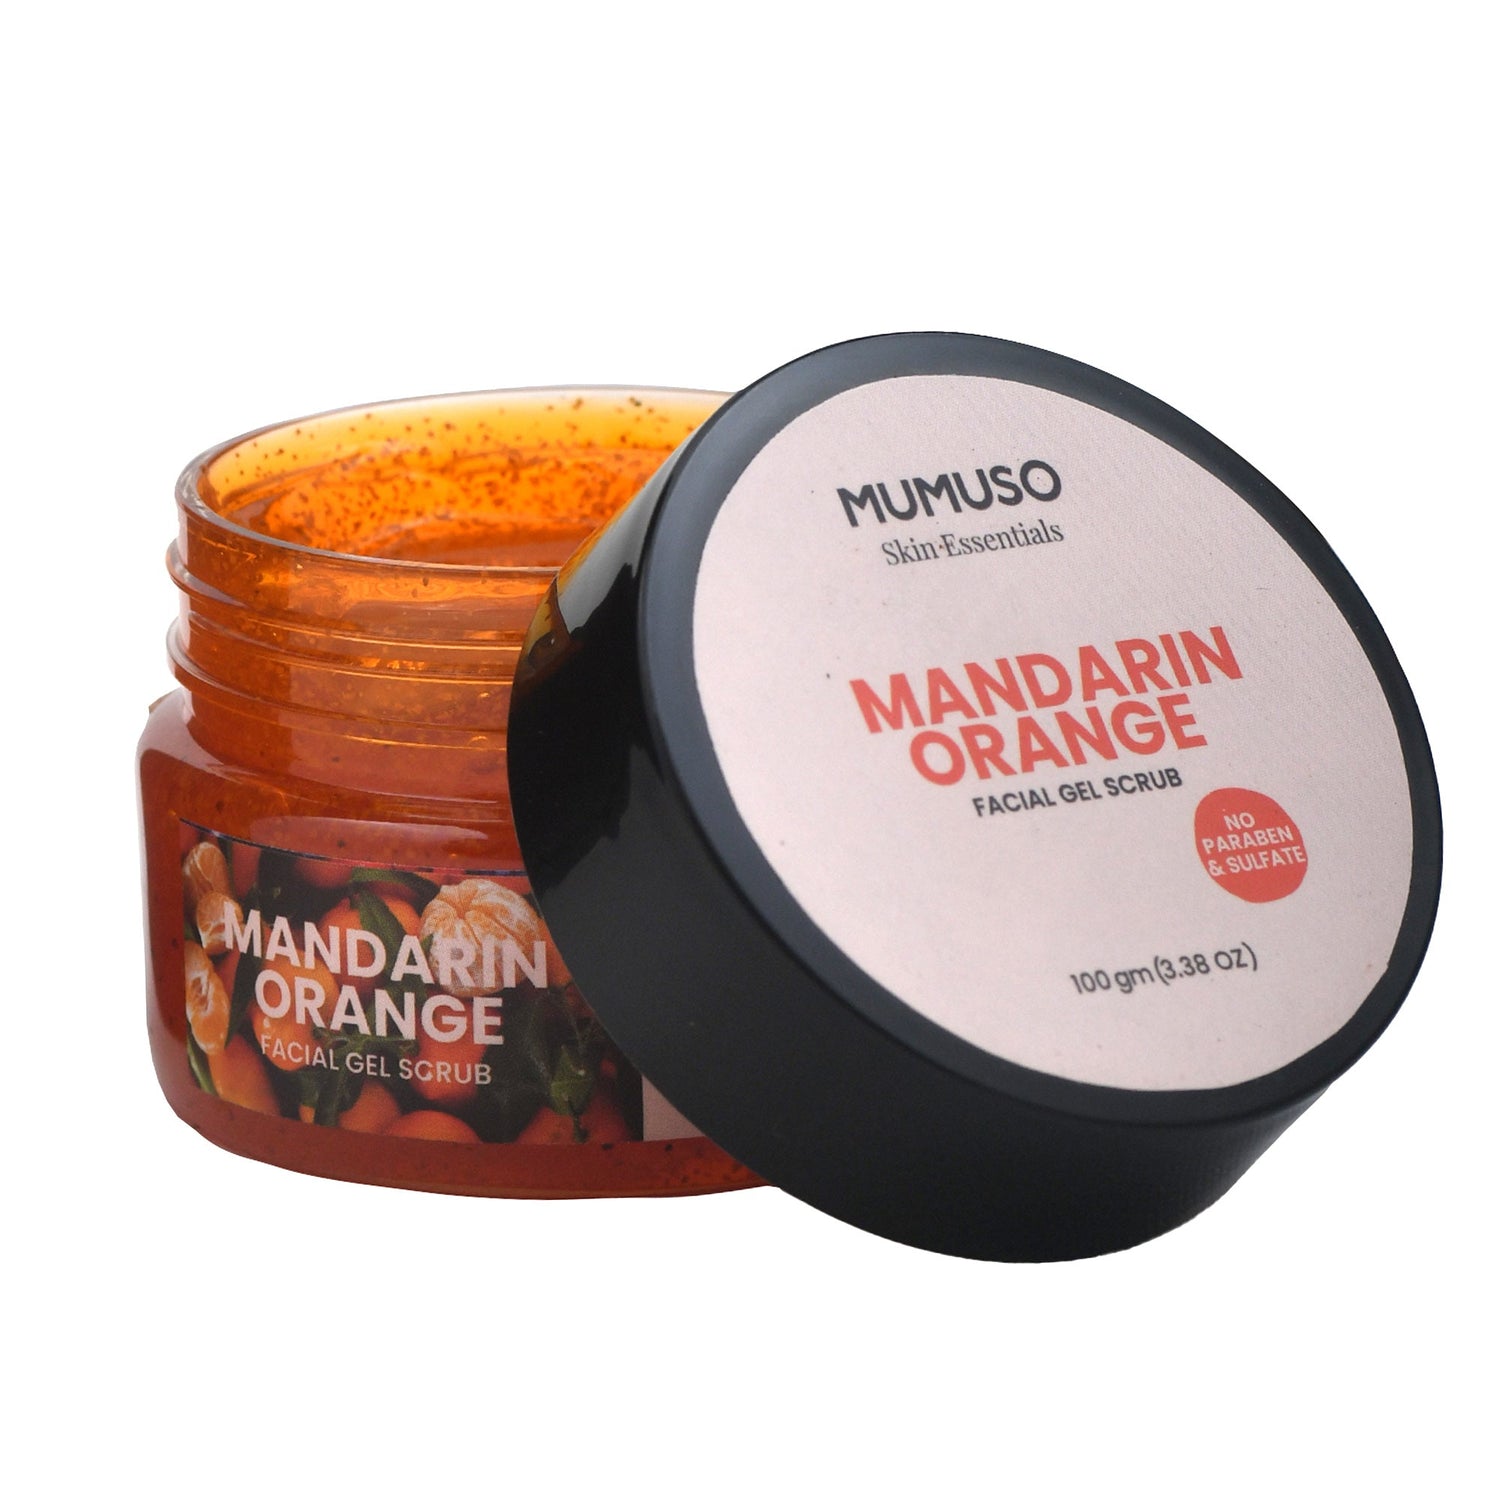 Mumuso Skin Essentials Mandarin Orange Facial Gel Scrub - 100 gm Mumuso